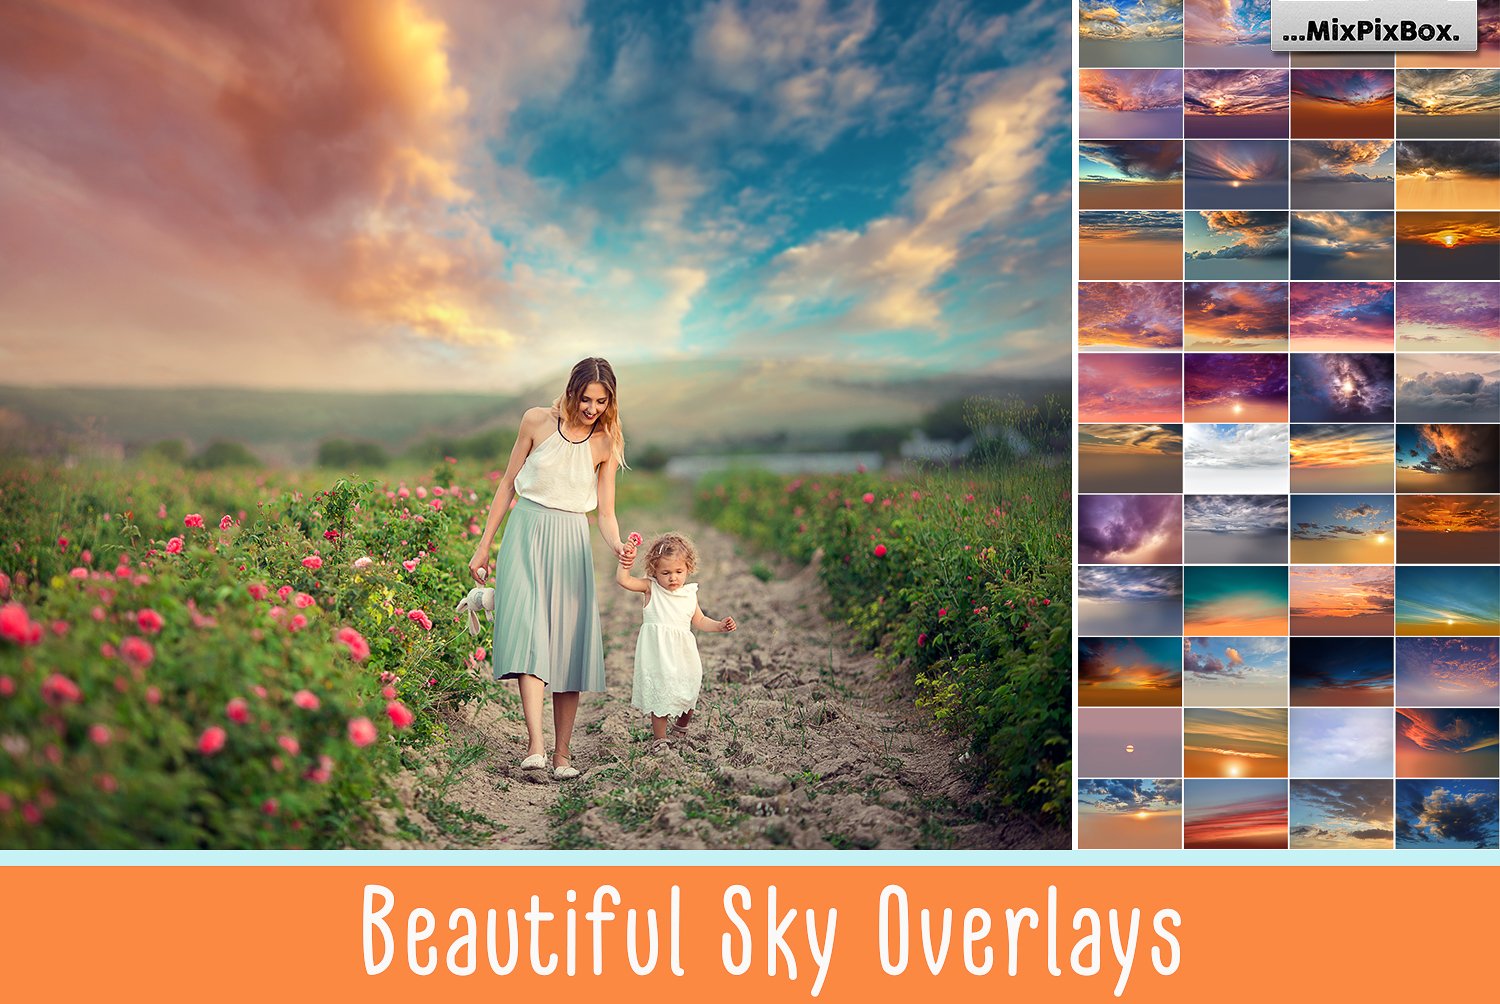 Beautiful Sky Overlayscover image.